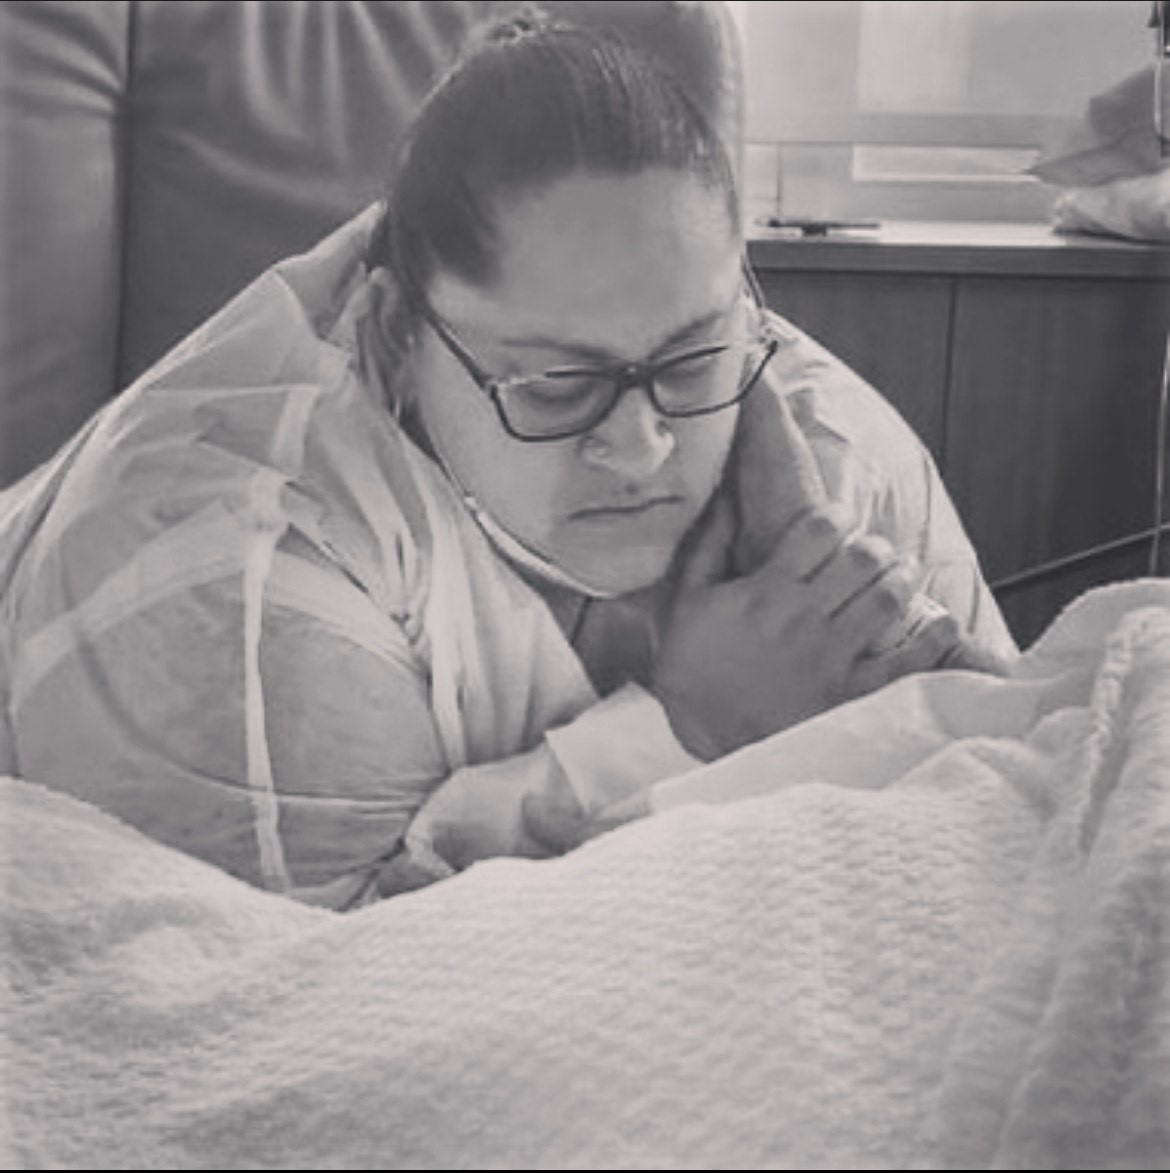 Marissa Gonzalez at her aunt's hospital bedside.